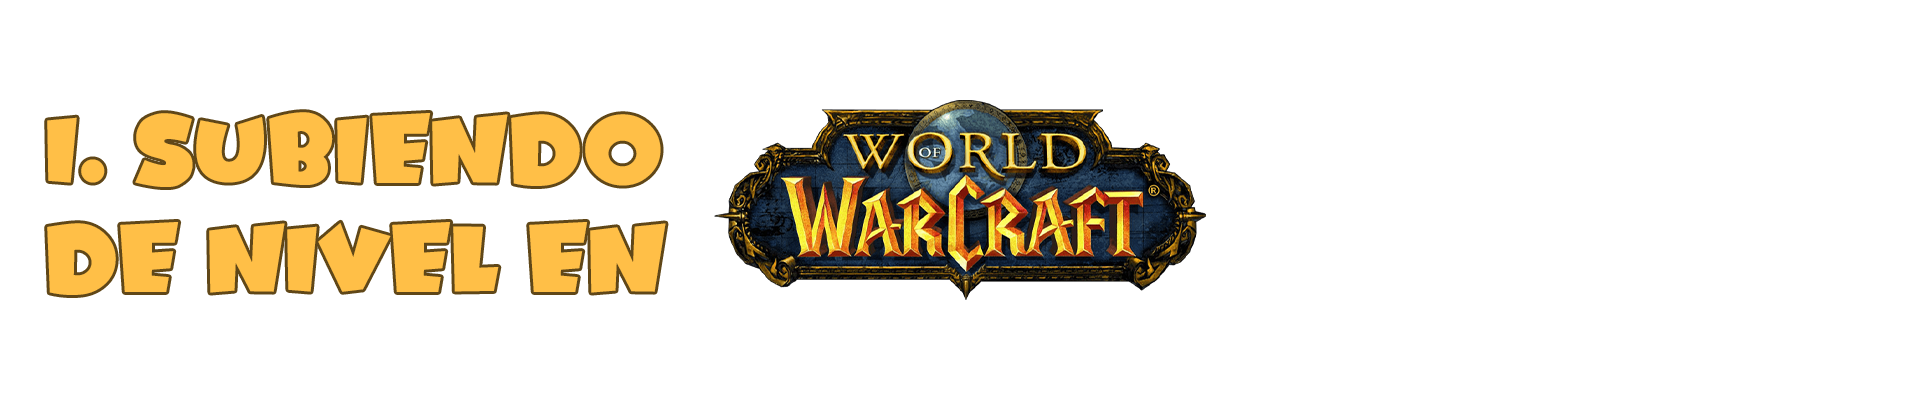 Subiendo de Nivel en World of Warcraft Cataclysm Classic